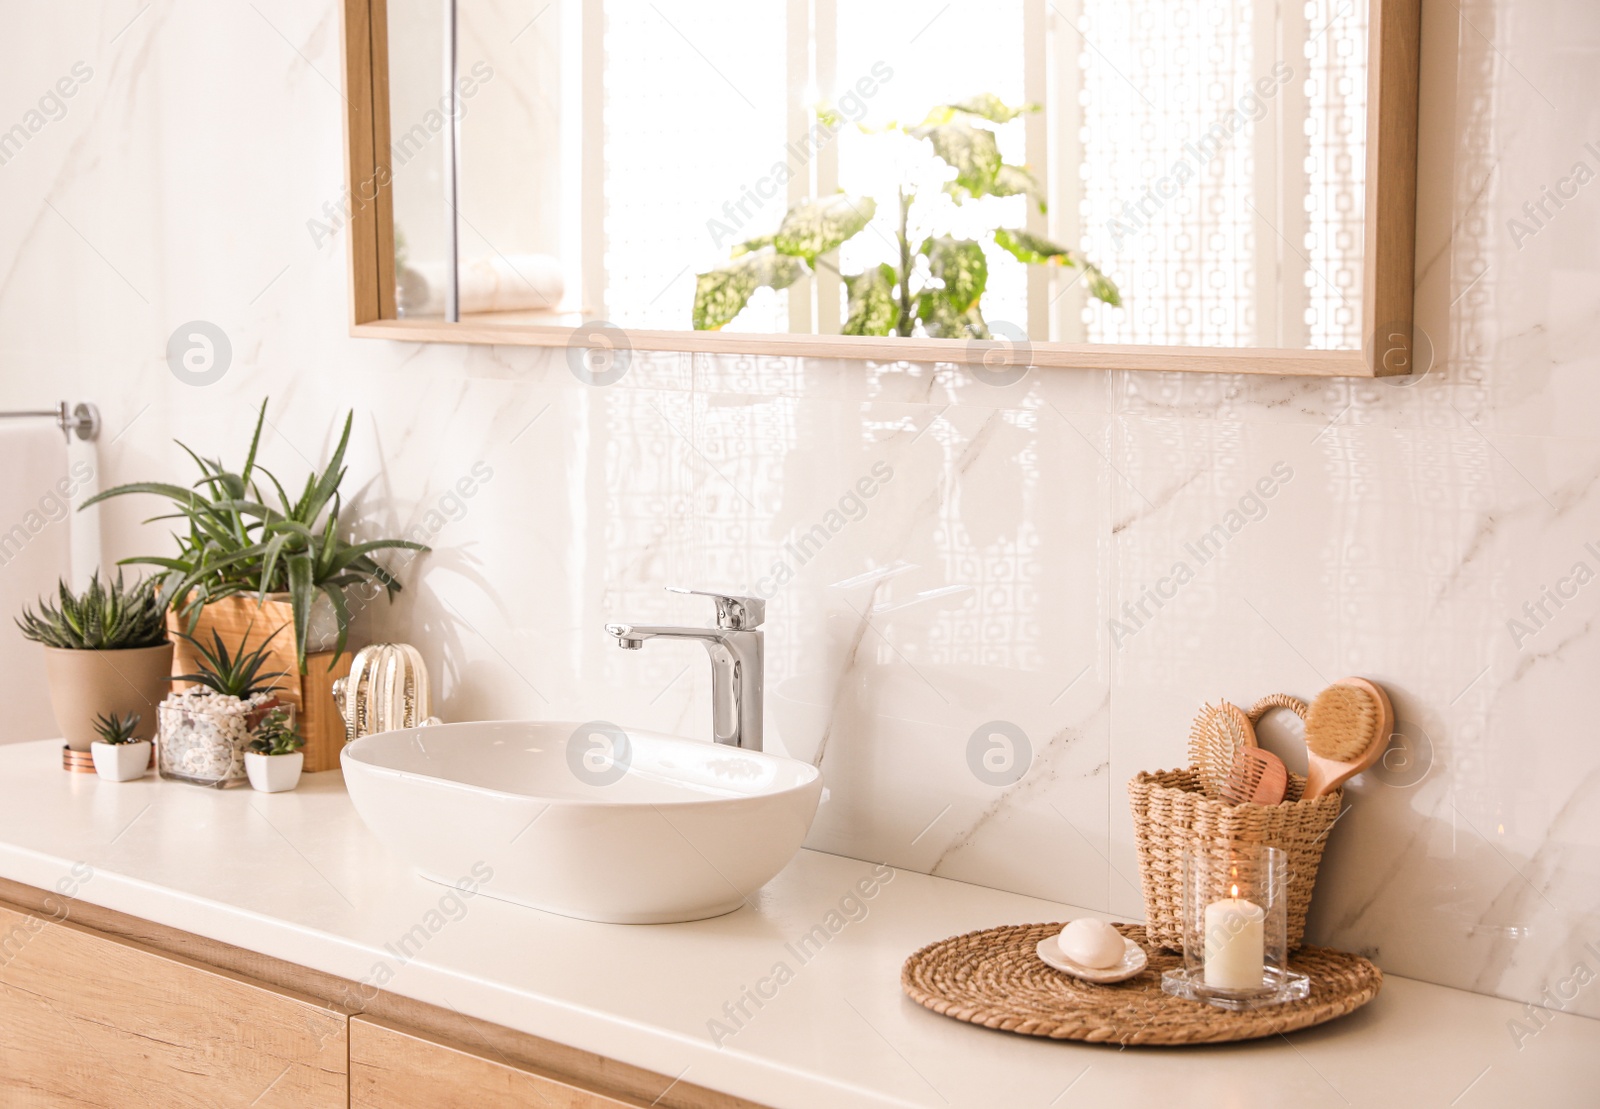 Photo of Stylish bathroom interior with countertop, mirror and houseplants. Design idea